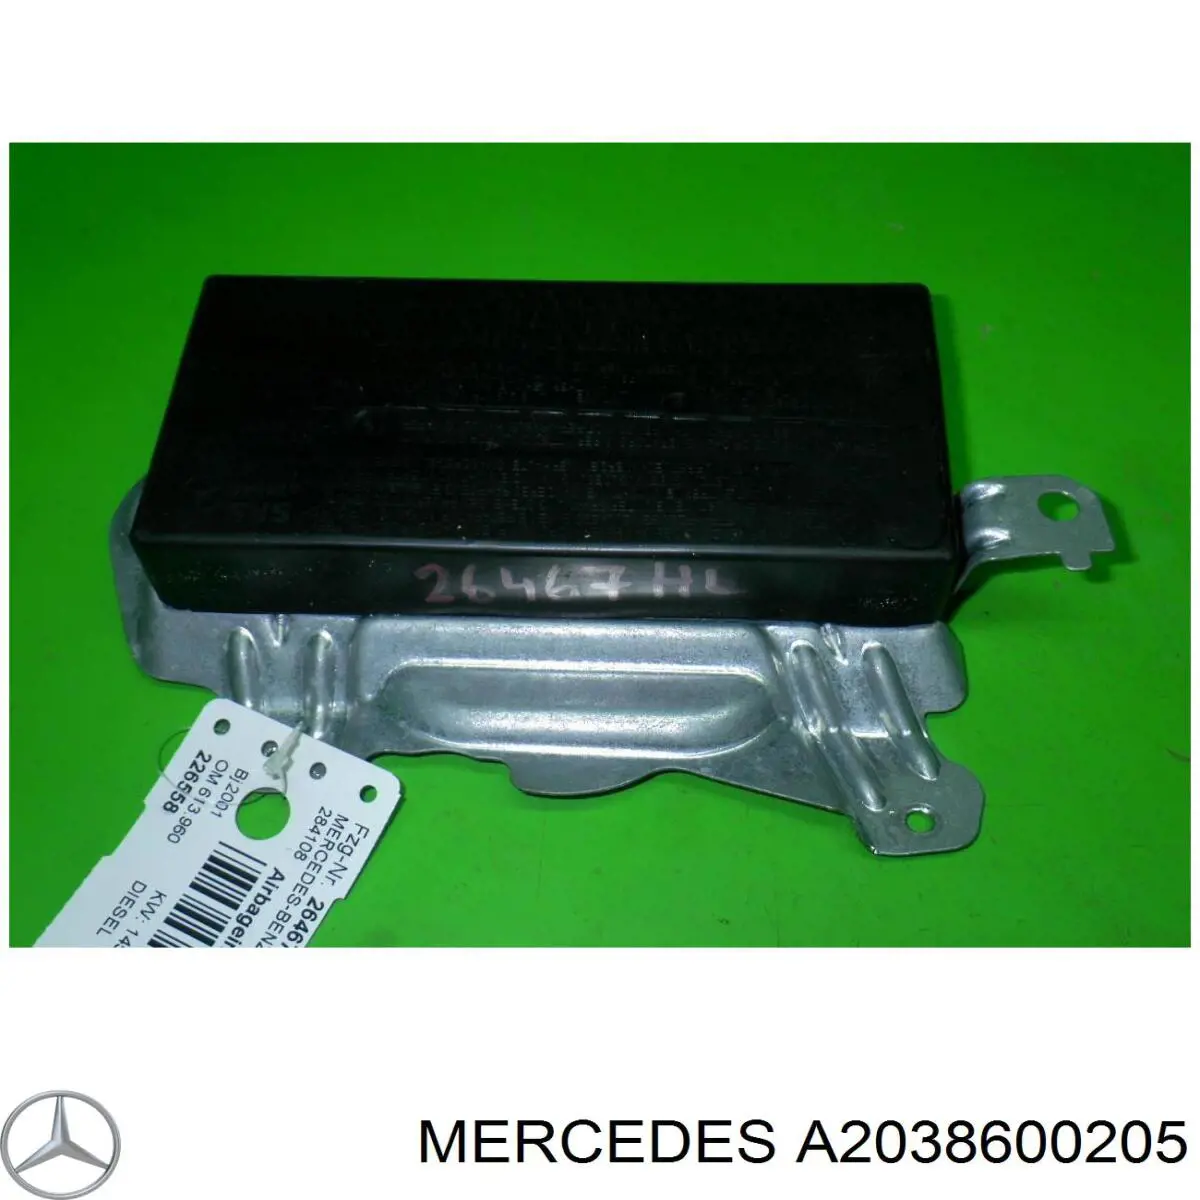 A2038600205 Mercedes